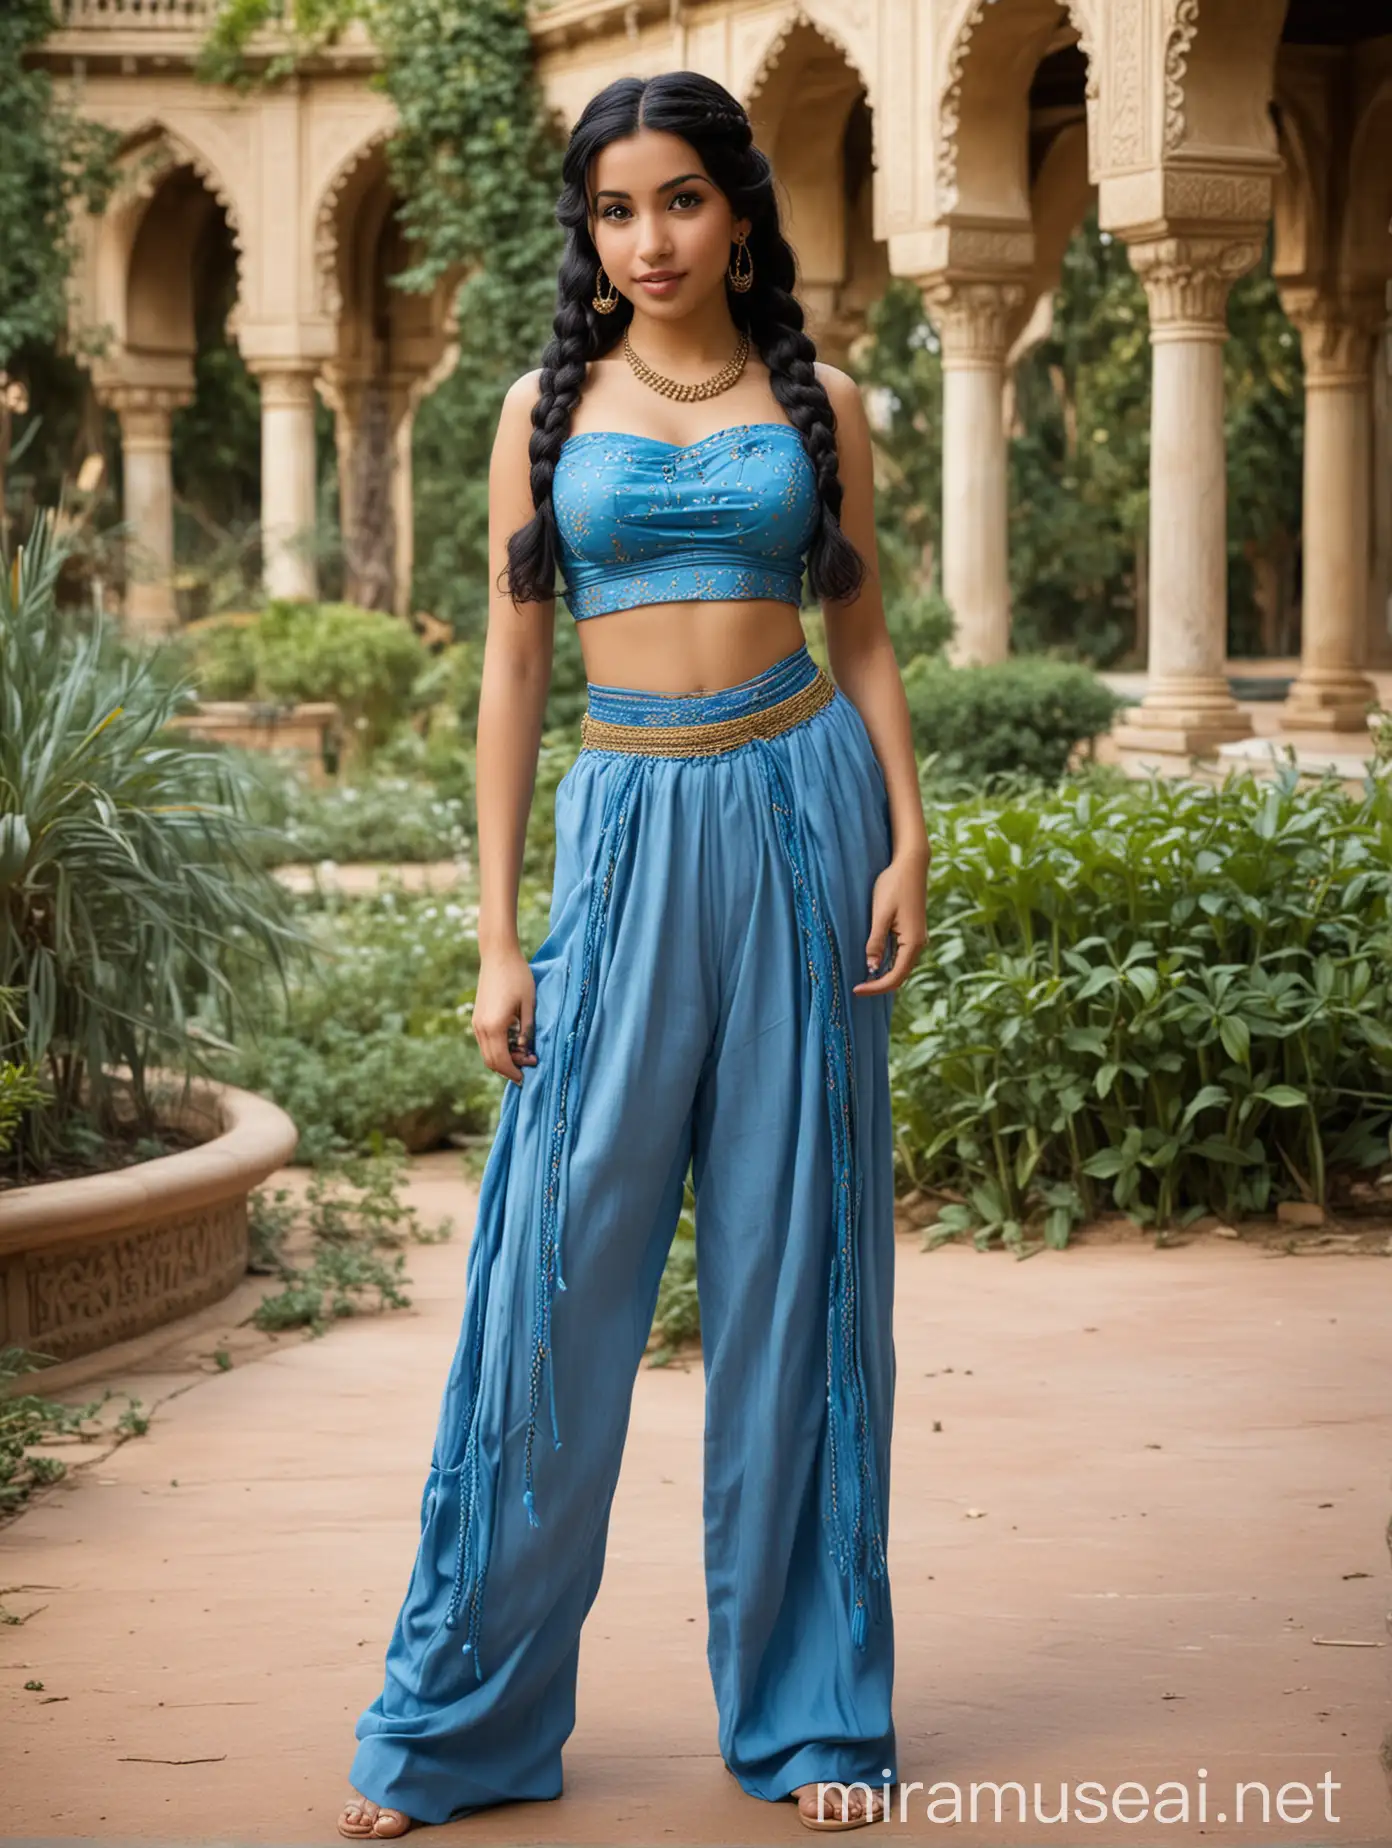 Princess Jasmine in the palace garden, 18 years old, Arab, Indian, blue harem pants, blue tube top, long black hair braided, demure, petite, perky